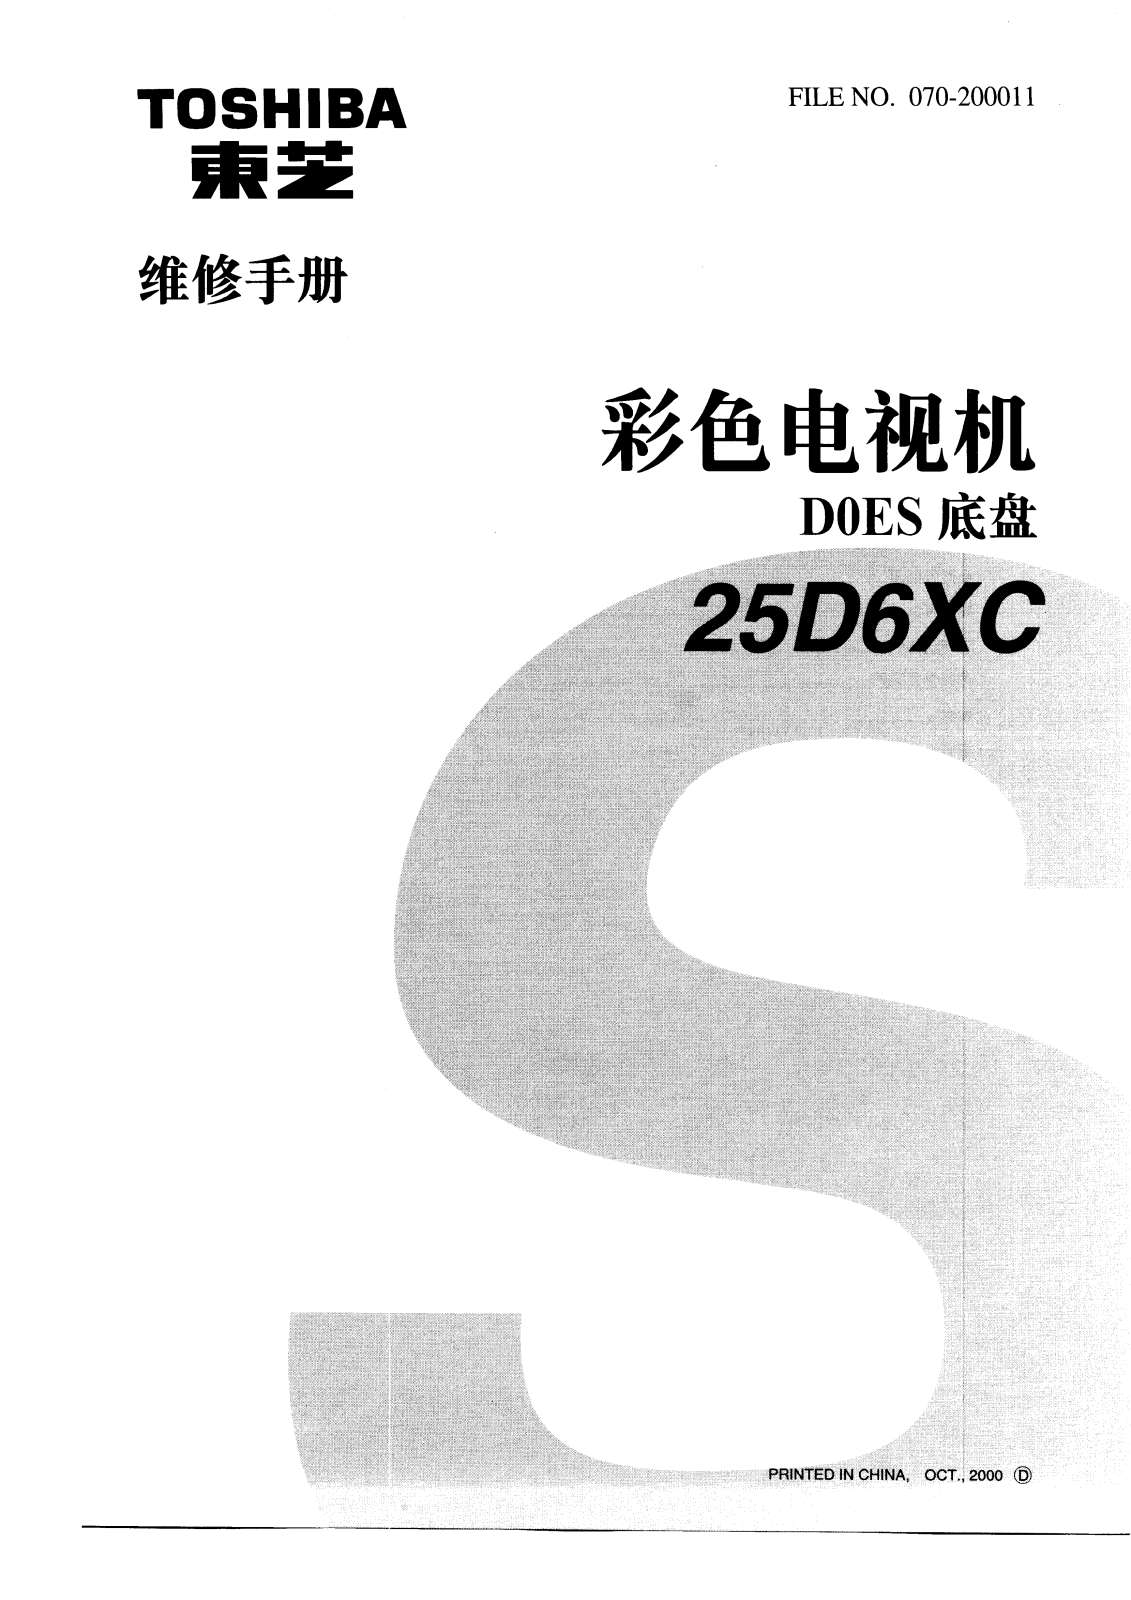 Toshiba 25D6XC Schematic